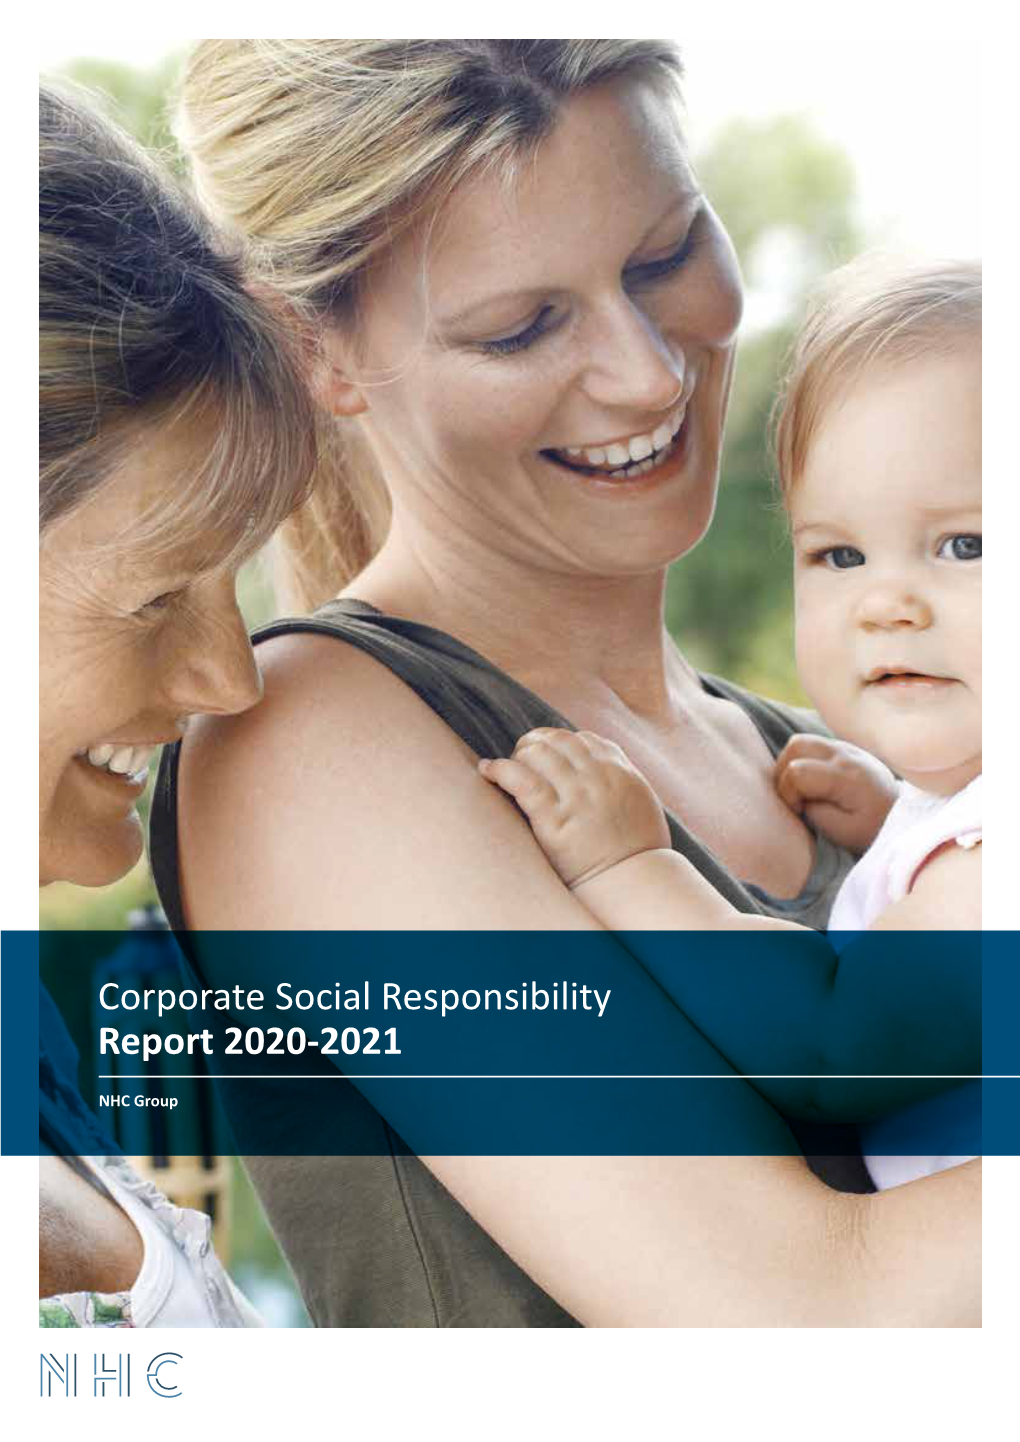 Corporate Social Responsibility Report 2020-2021